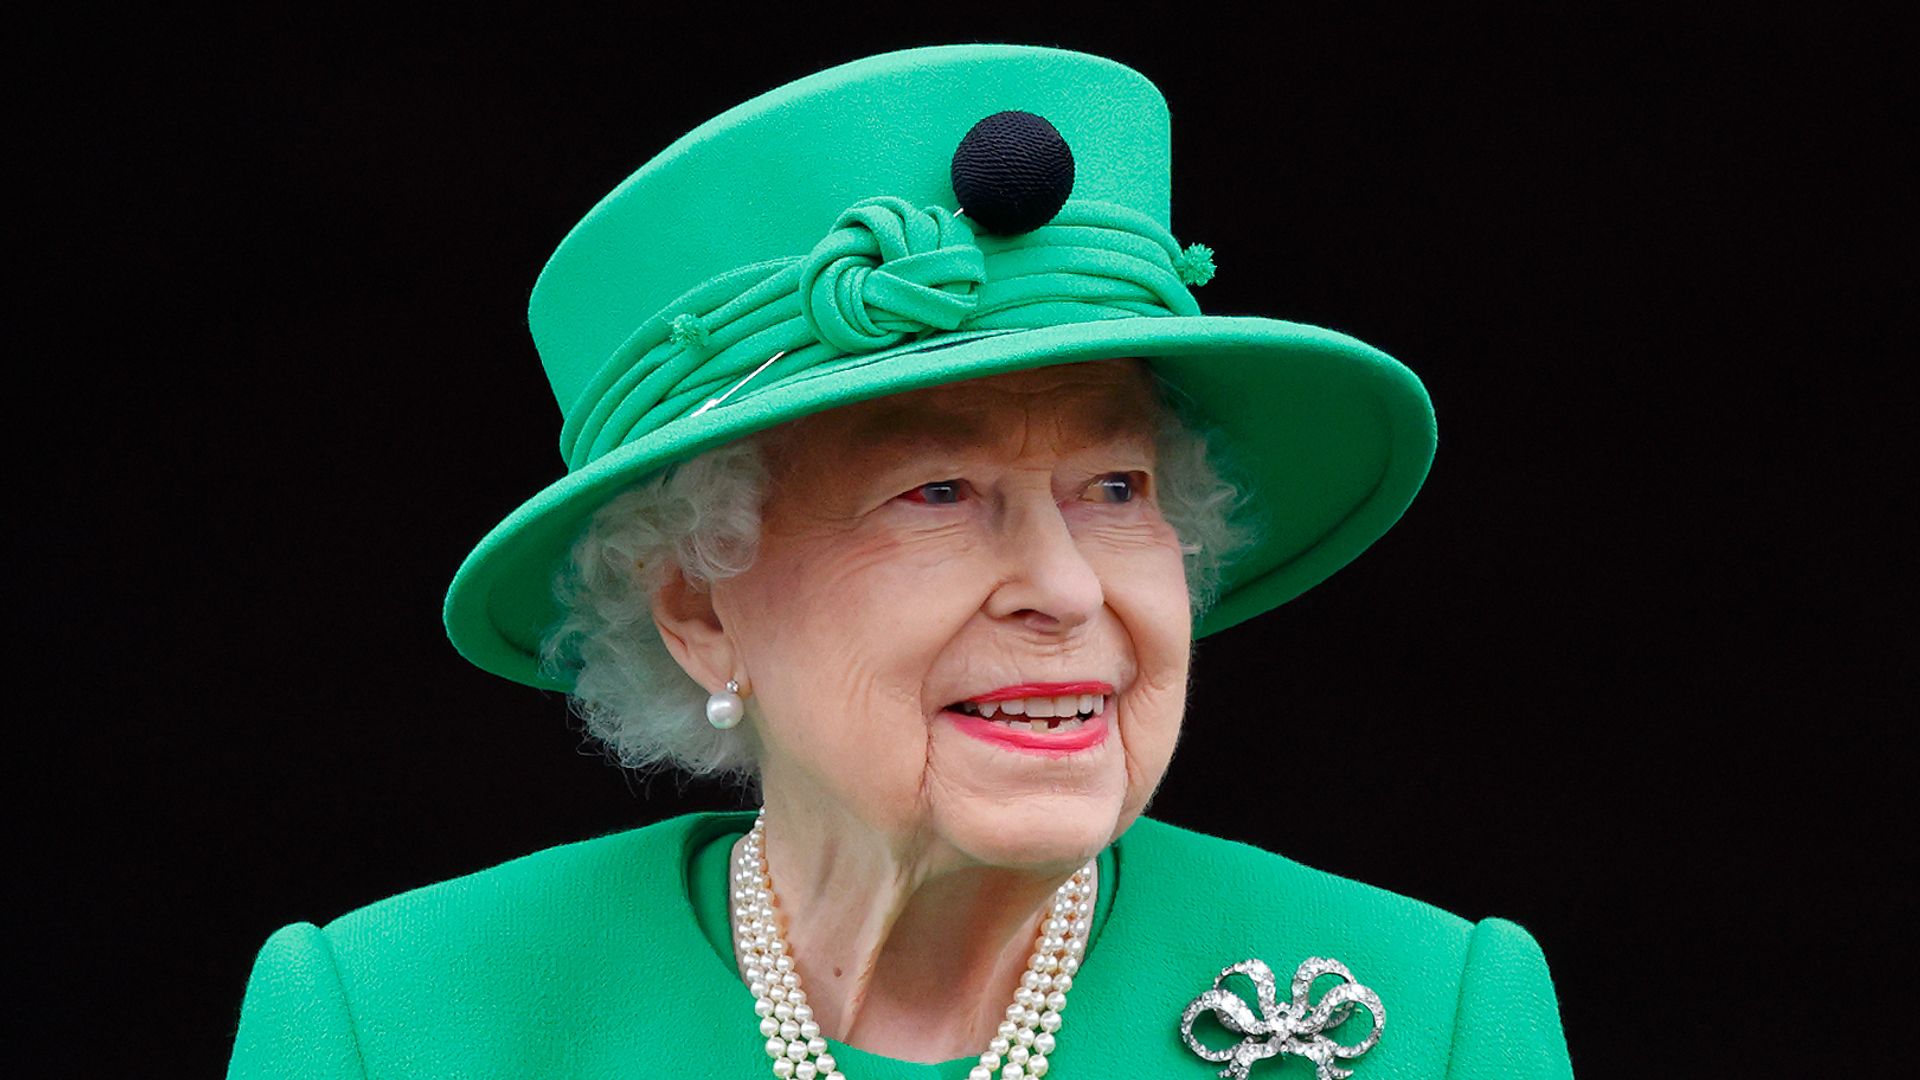 Queen Elizabeth II in a green outfit